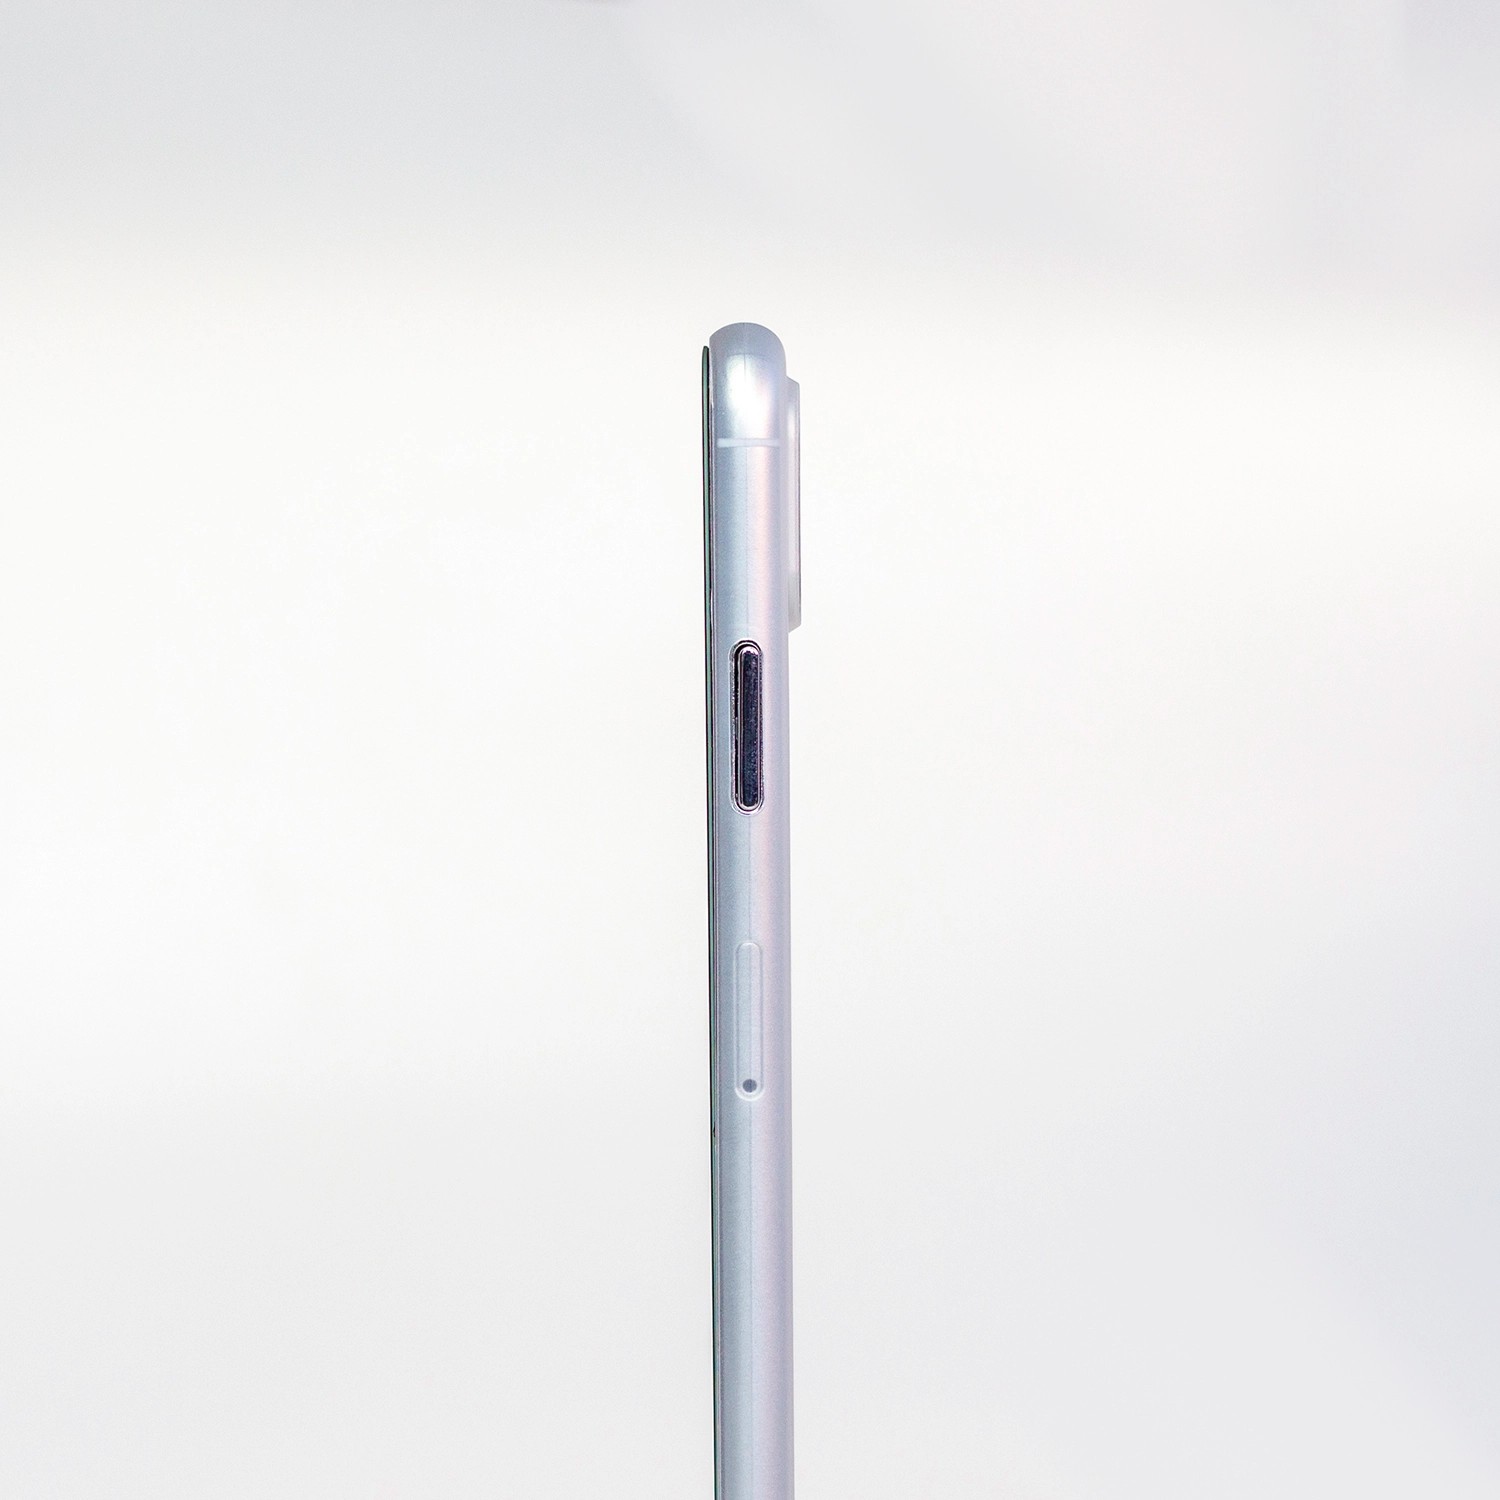 iPhone XS Max Ultra Thin Phone Case